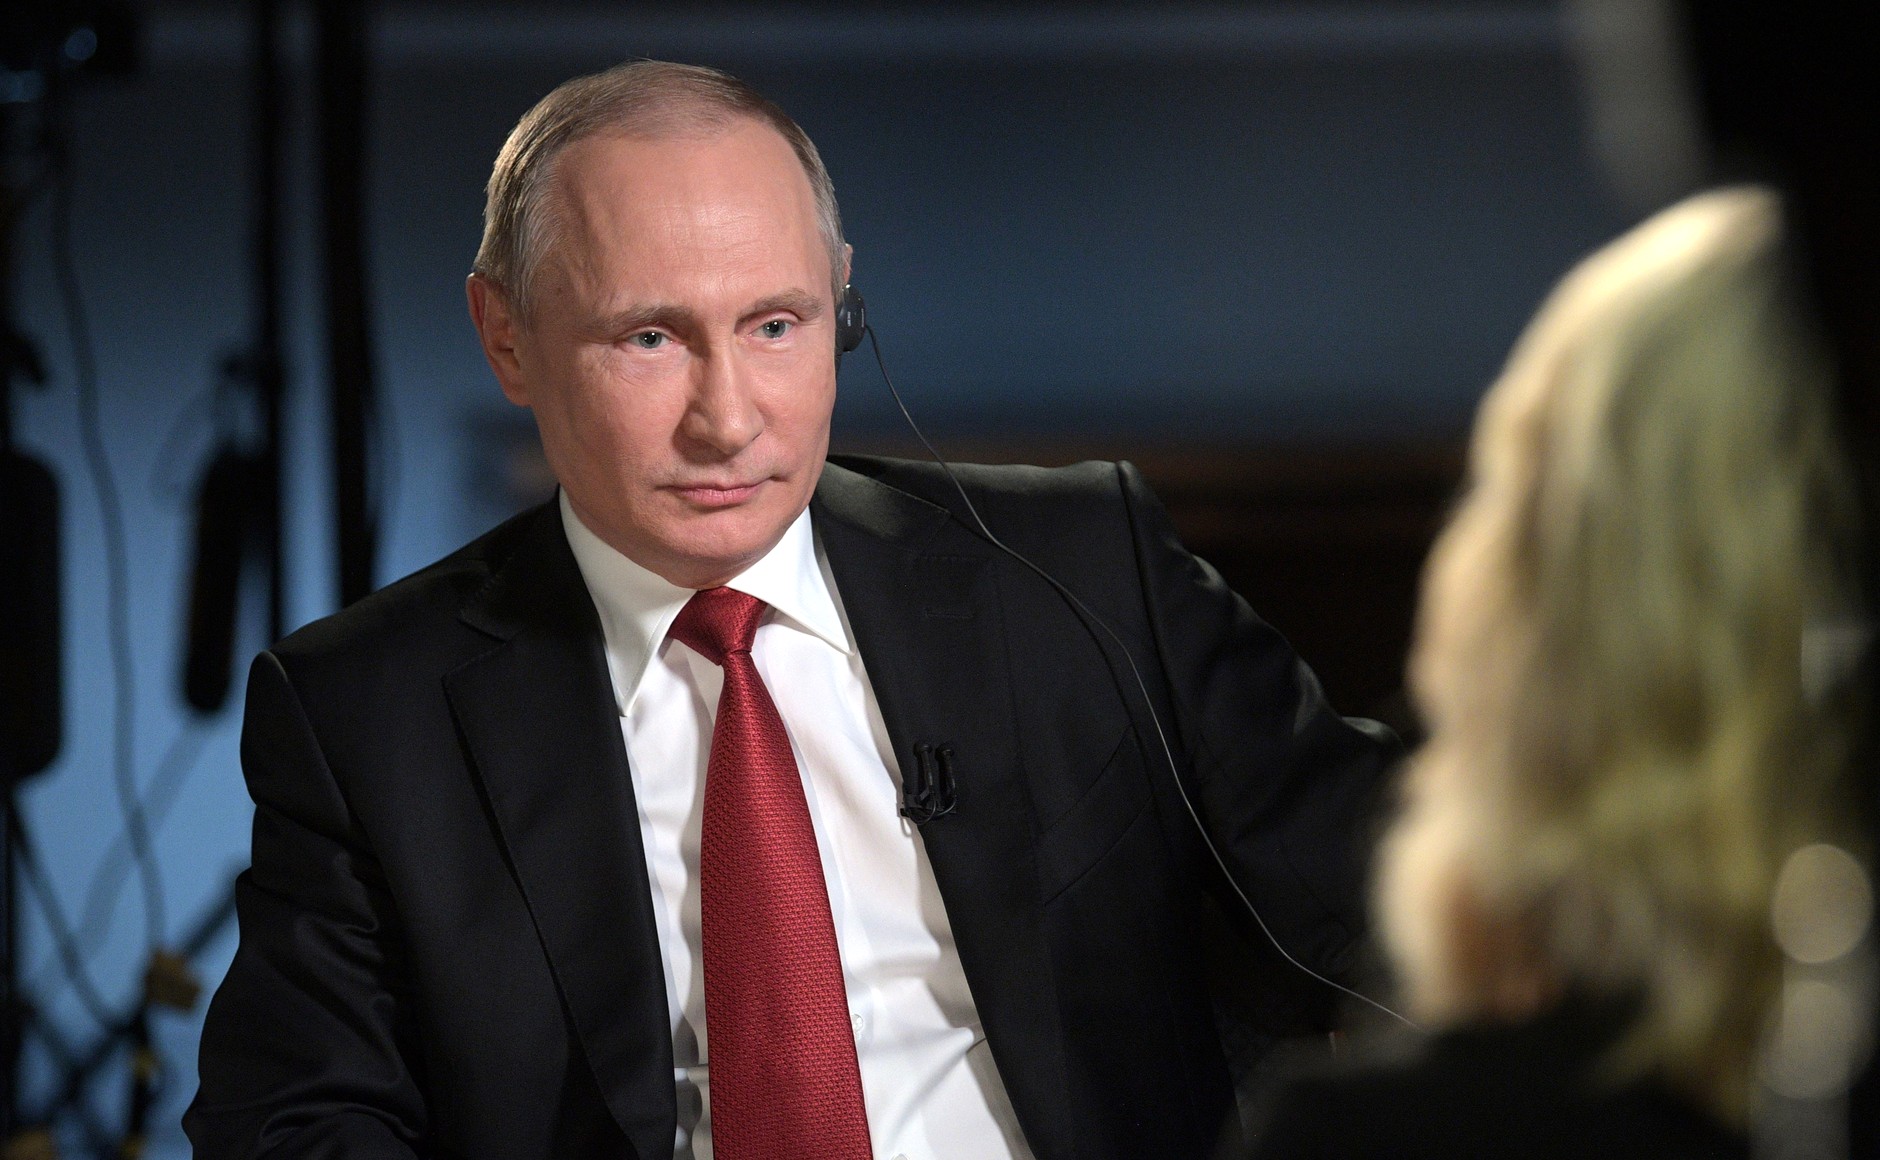 Putin says U.S. should modify electoral system